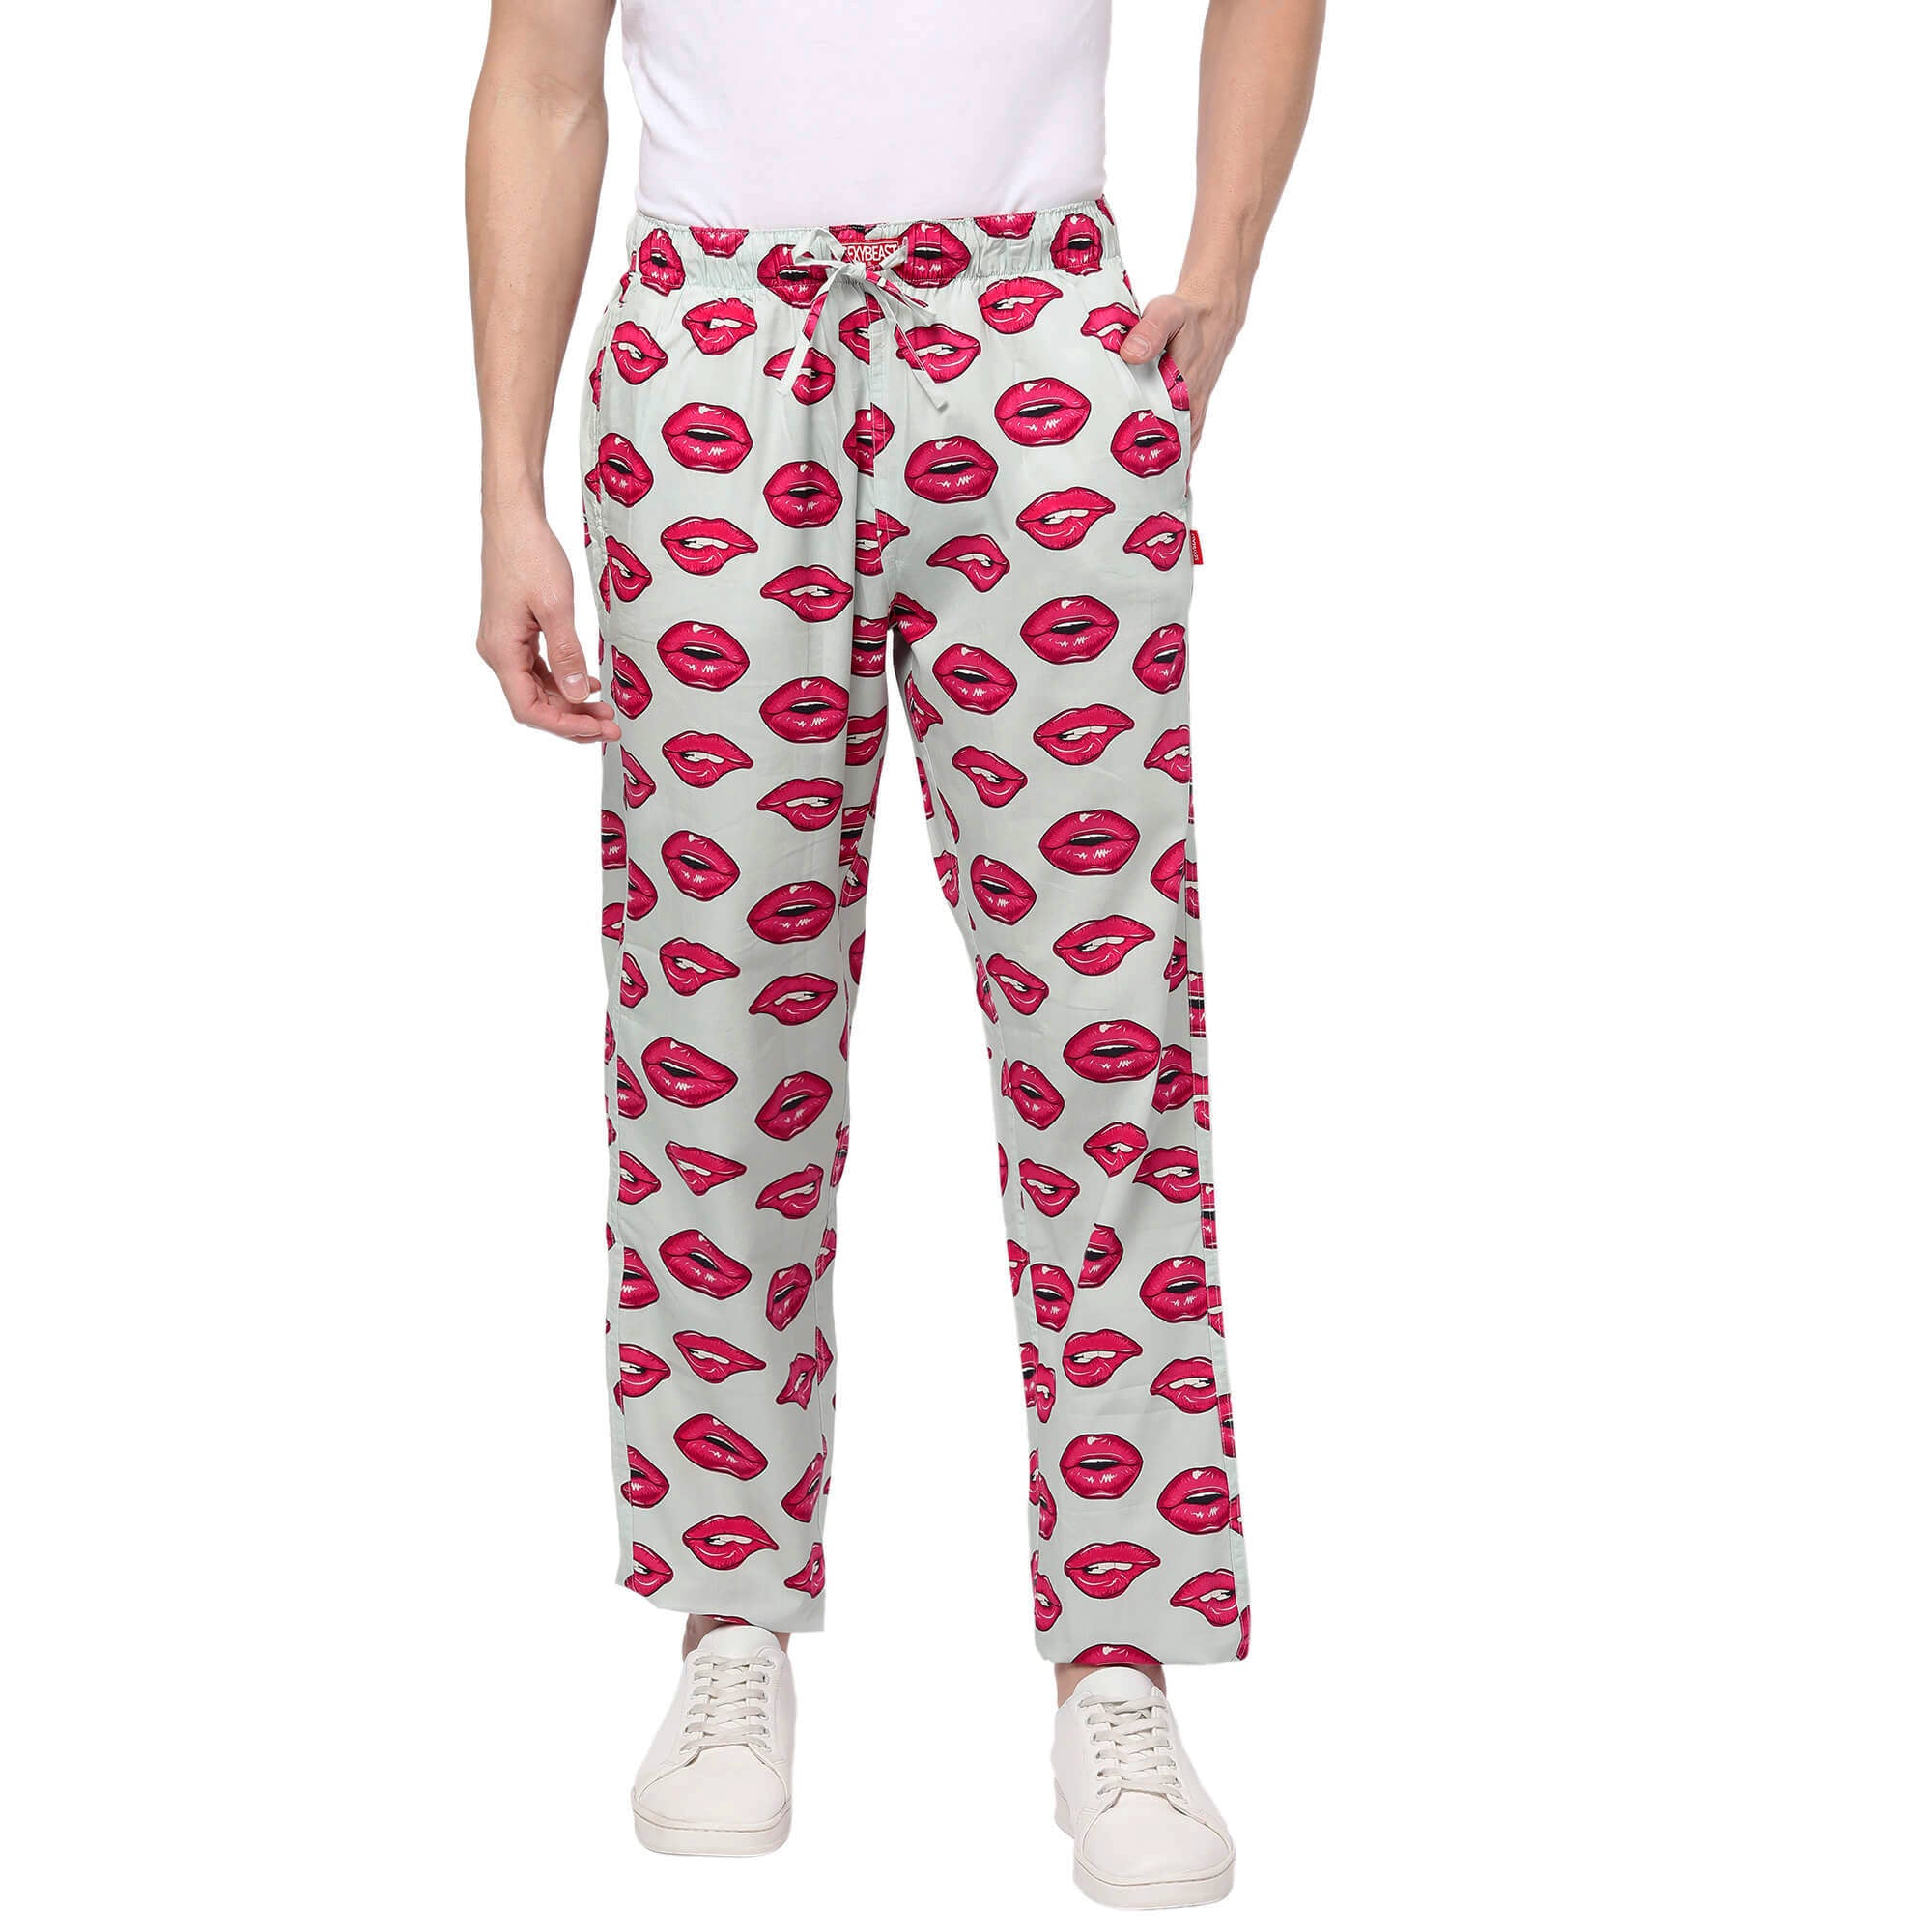  Funky Pyjamas for Men